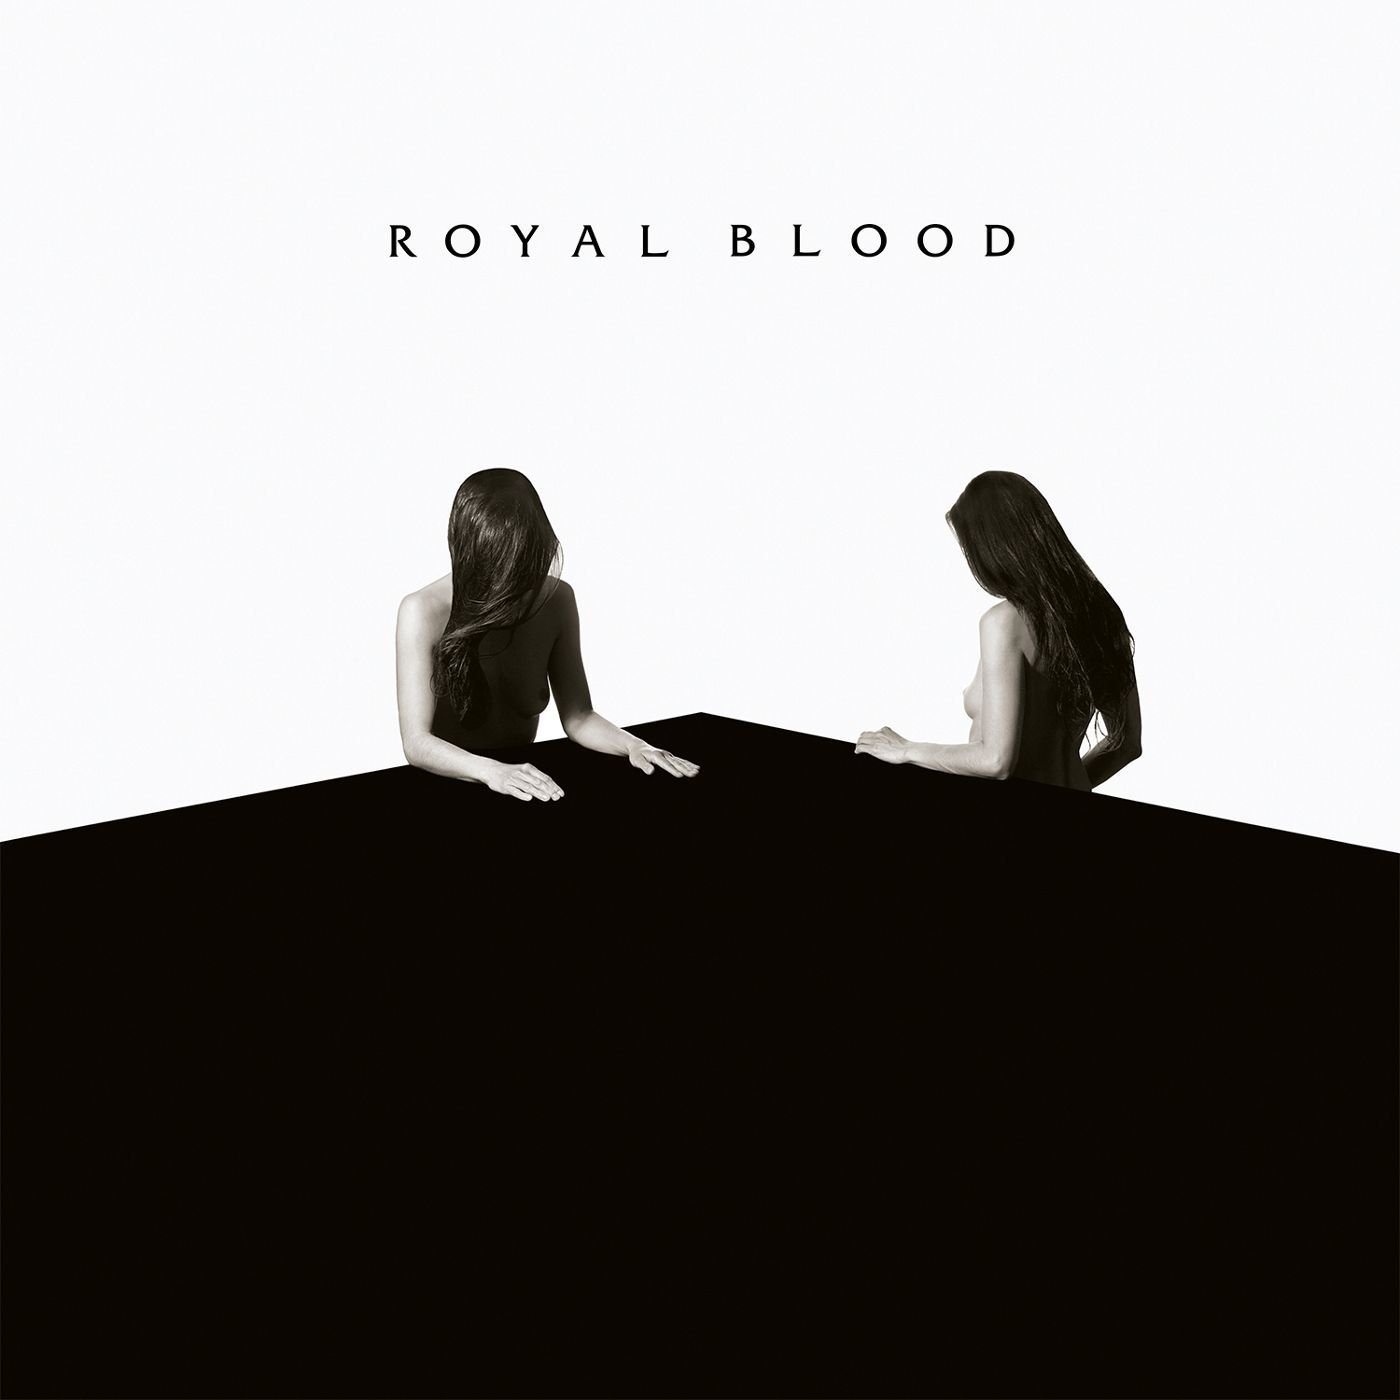 boom music reviews - Royal Blood